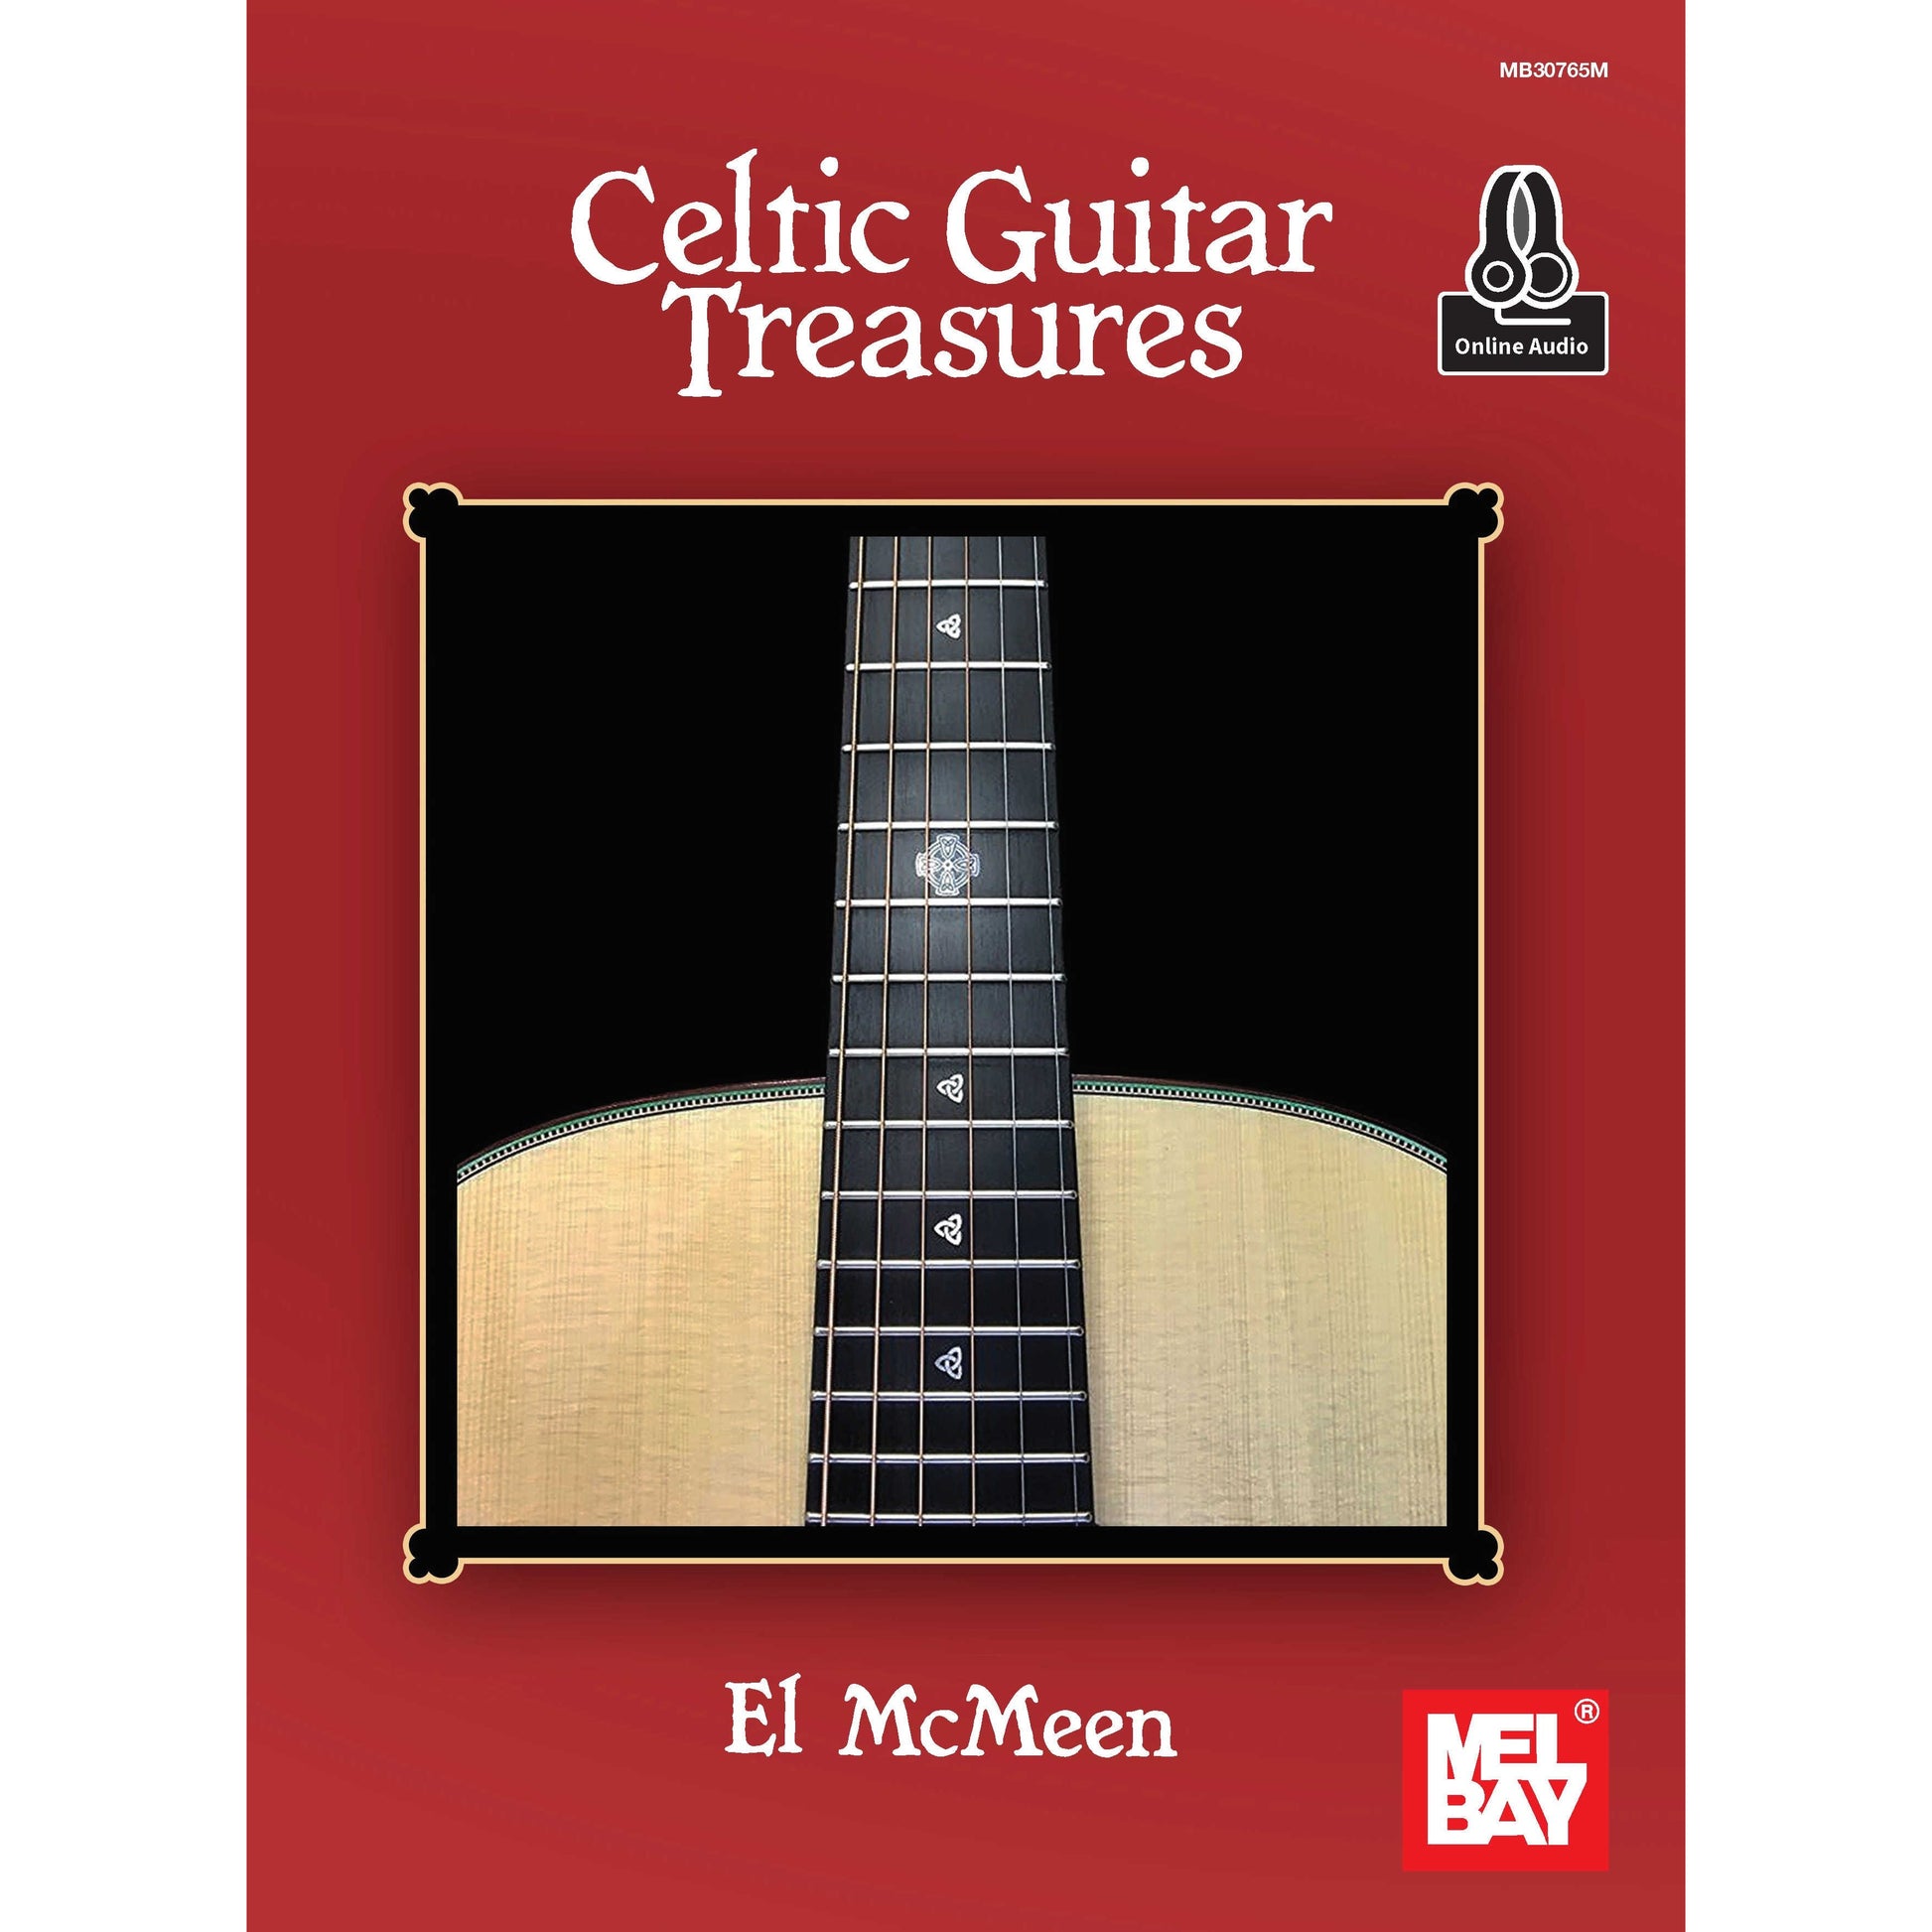 Image 1 of Celtic Guitar Treasures - SKU# 02-30765M : Product Type Media : Elderly Instruments